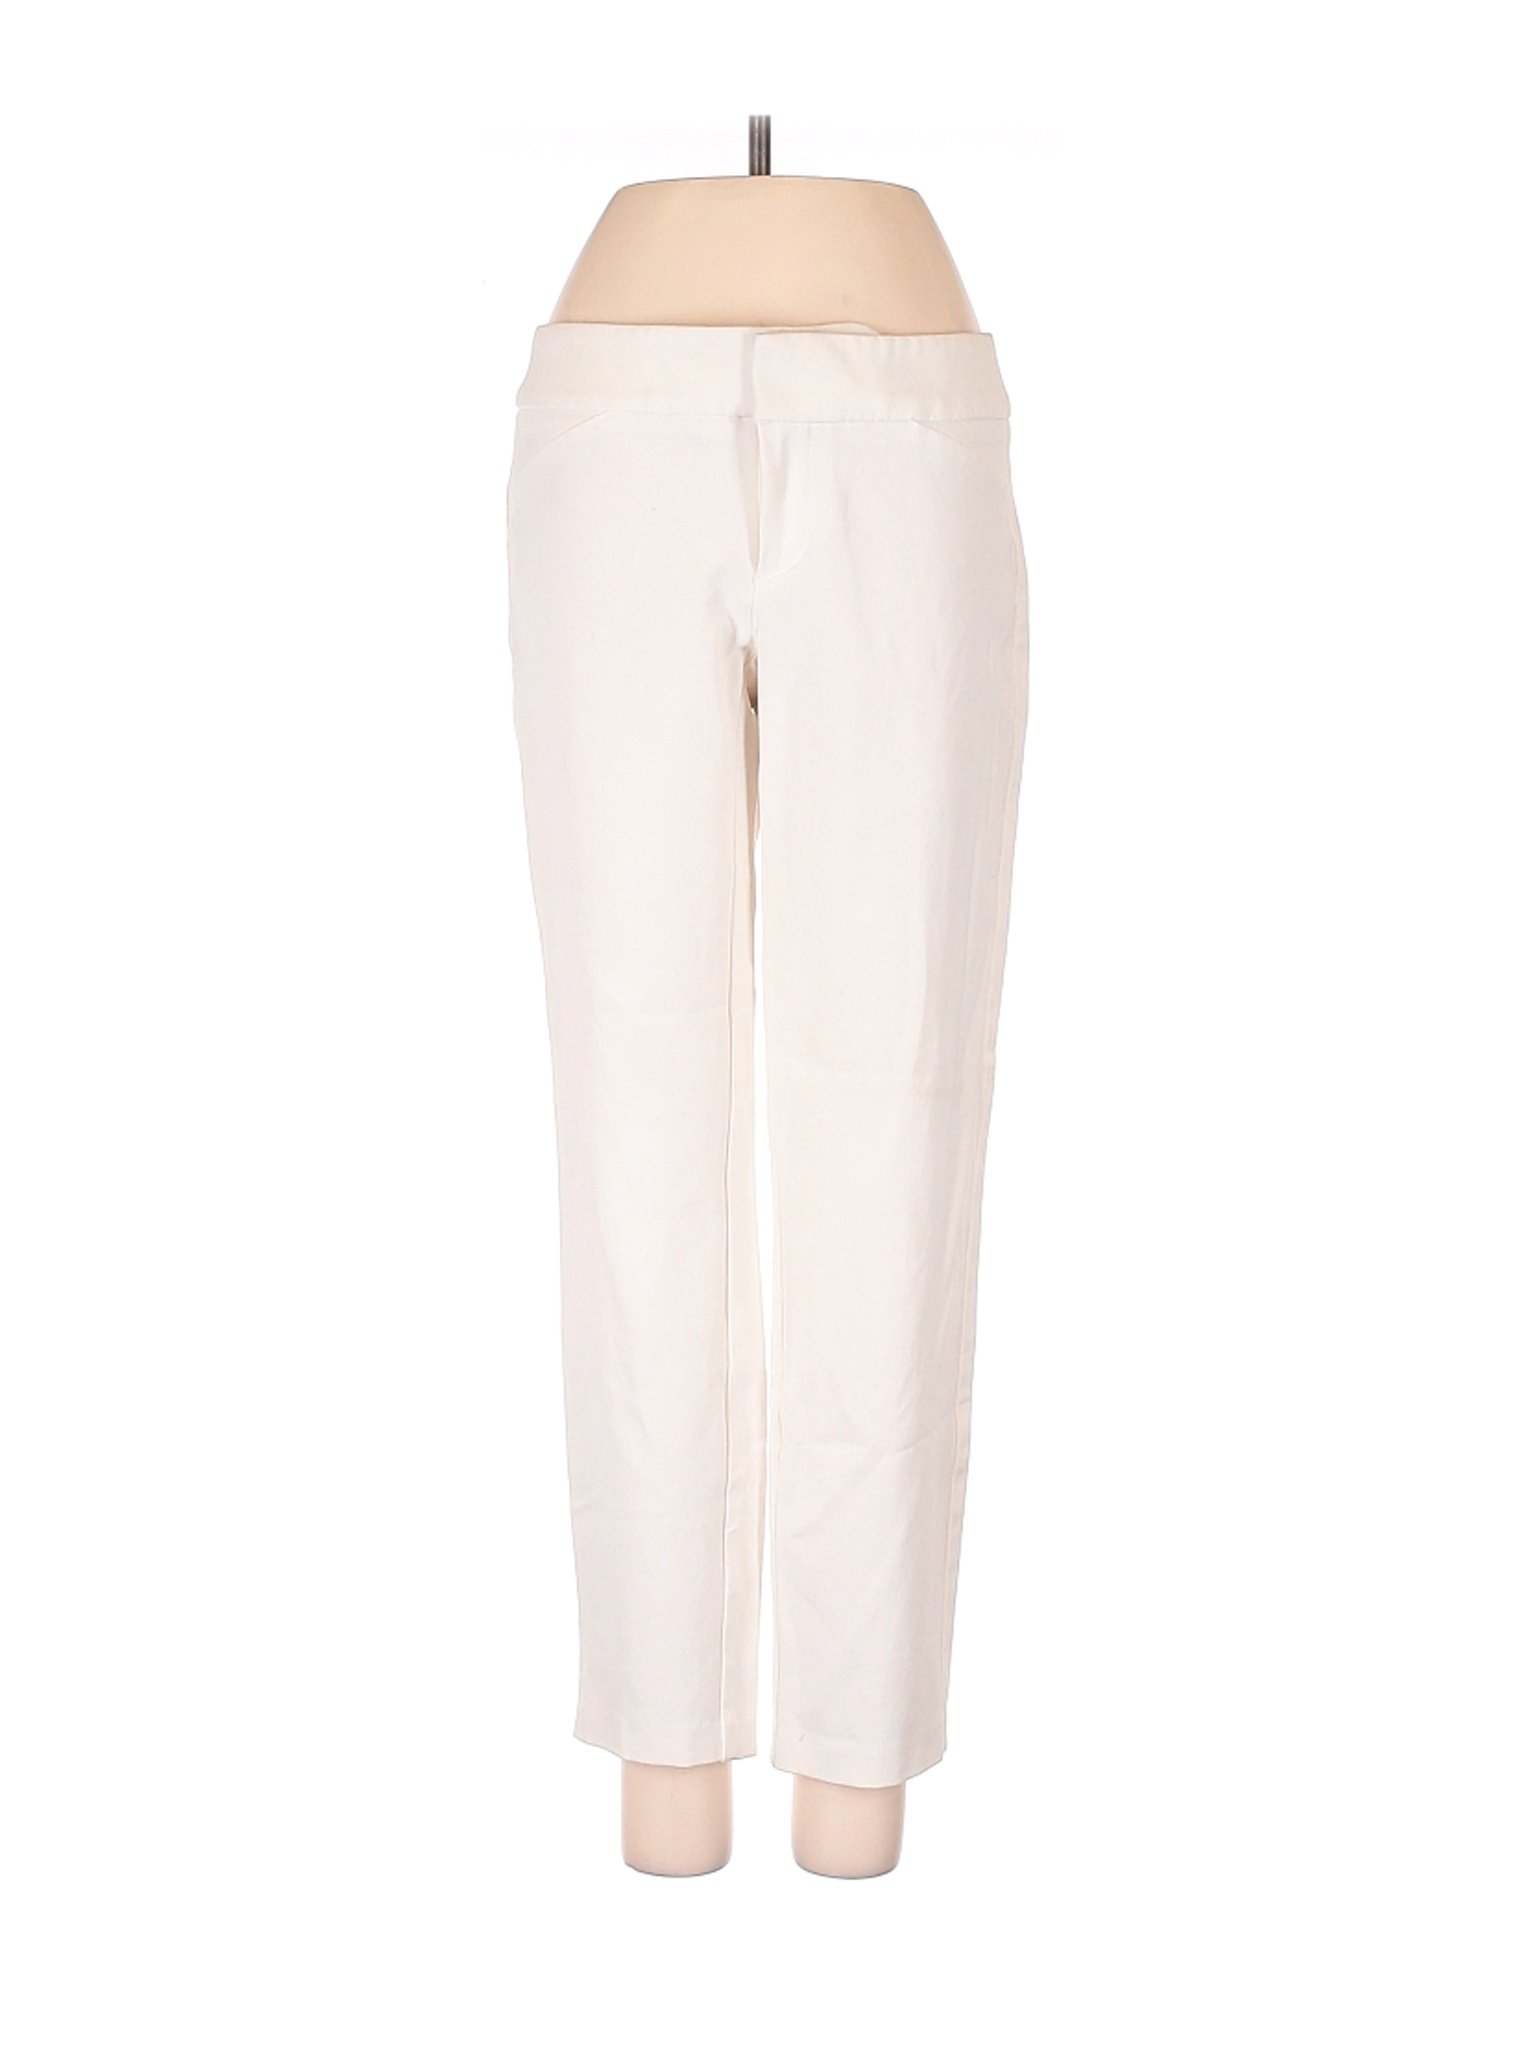 Cynthia Rowley TJX Women Ivory Dress Pants 0 | eBay